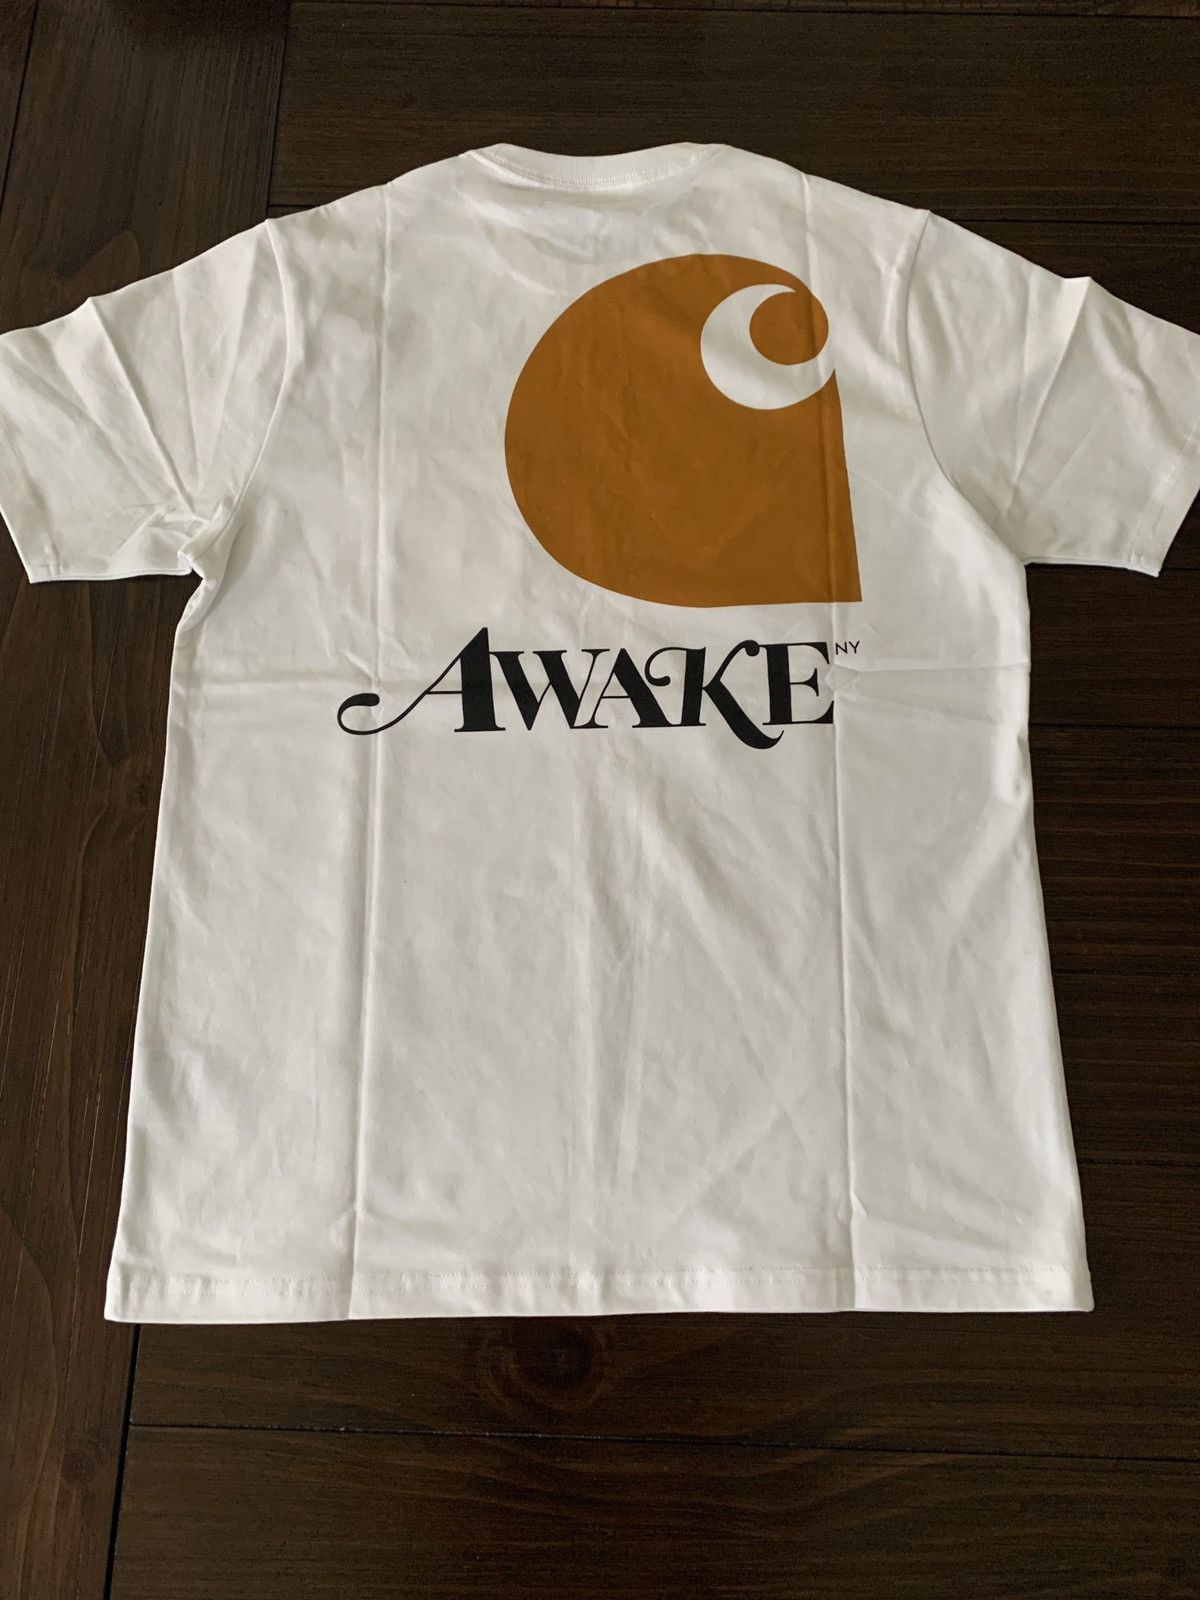 Carhartt Awake x Carhartt Wip pocket t-shirt | Grailed